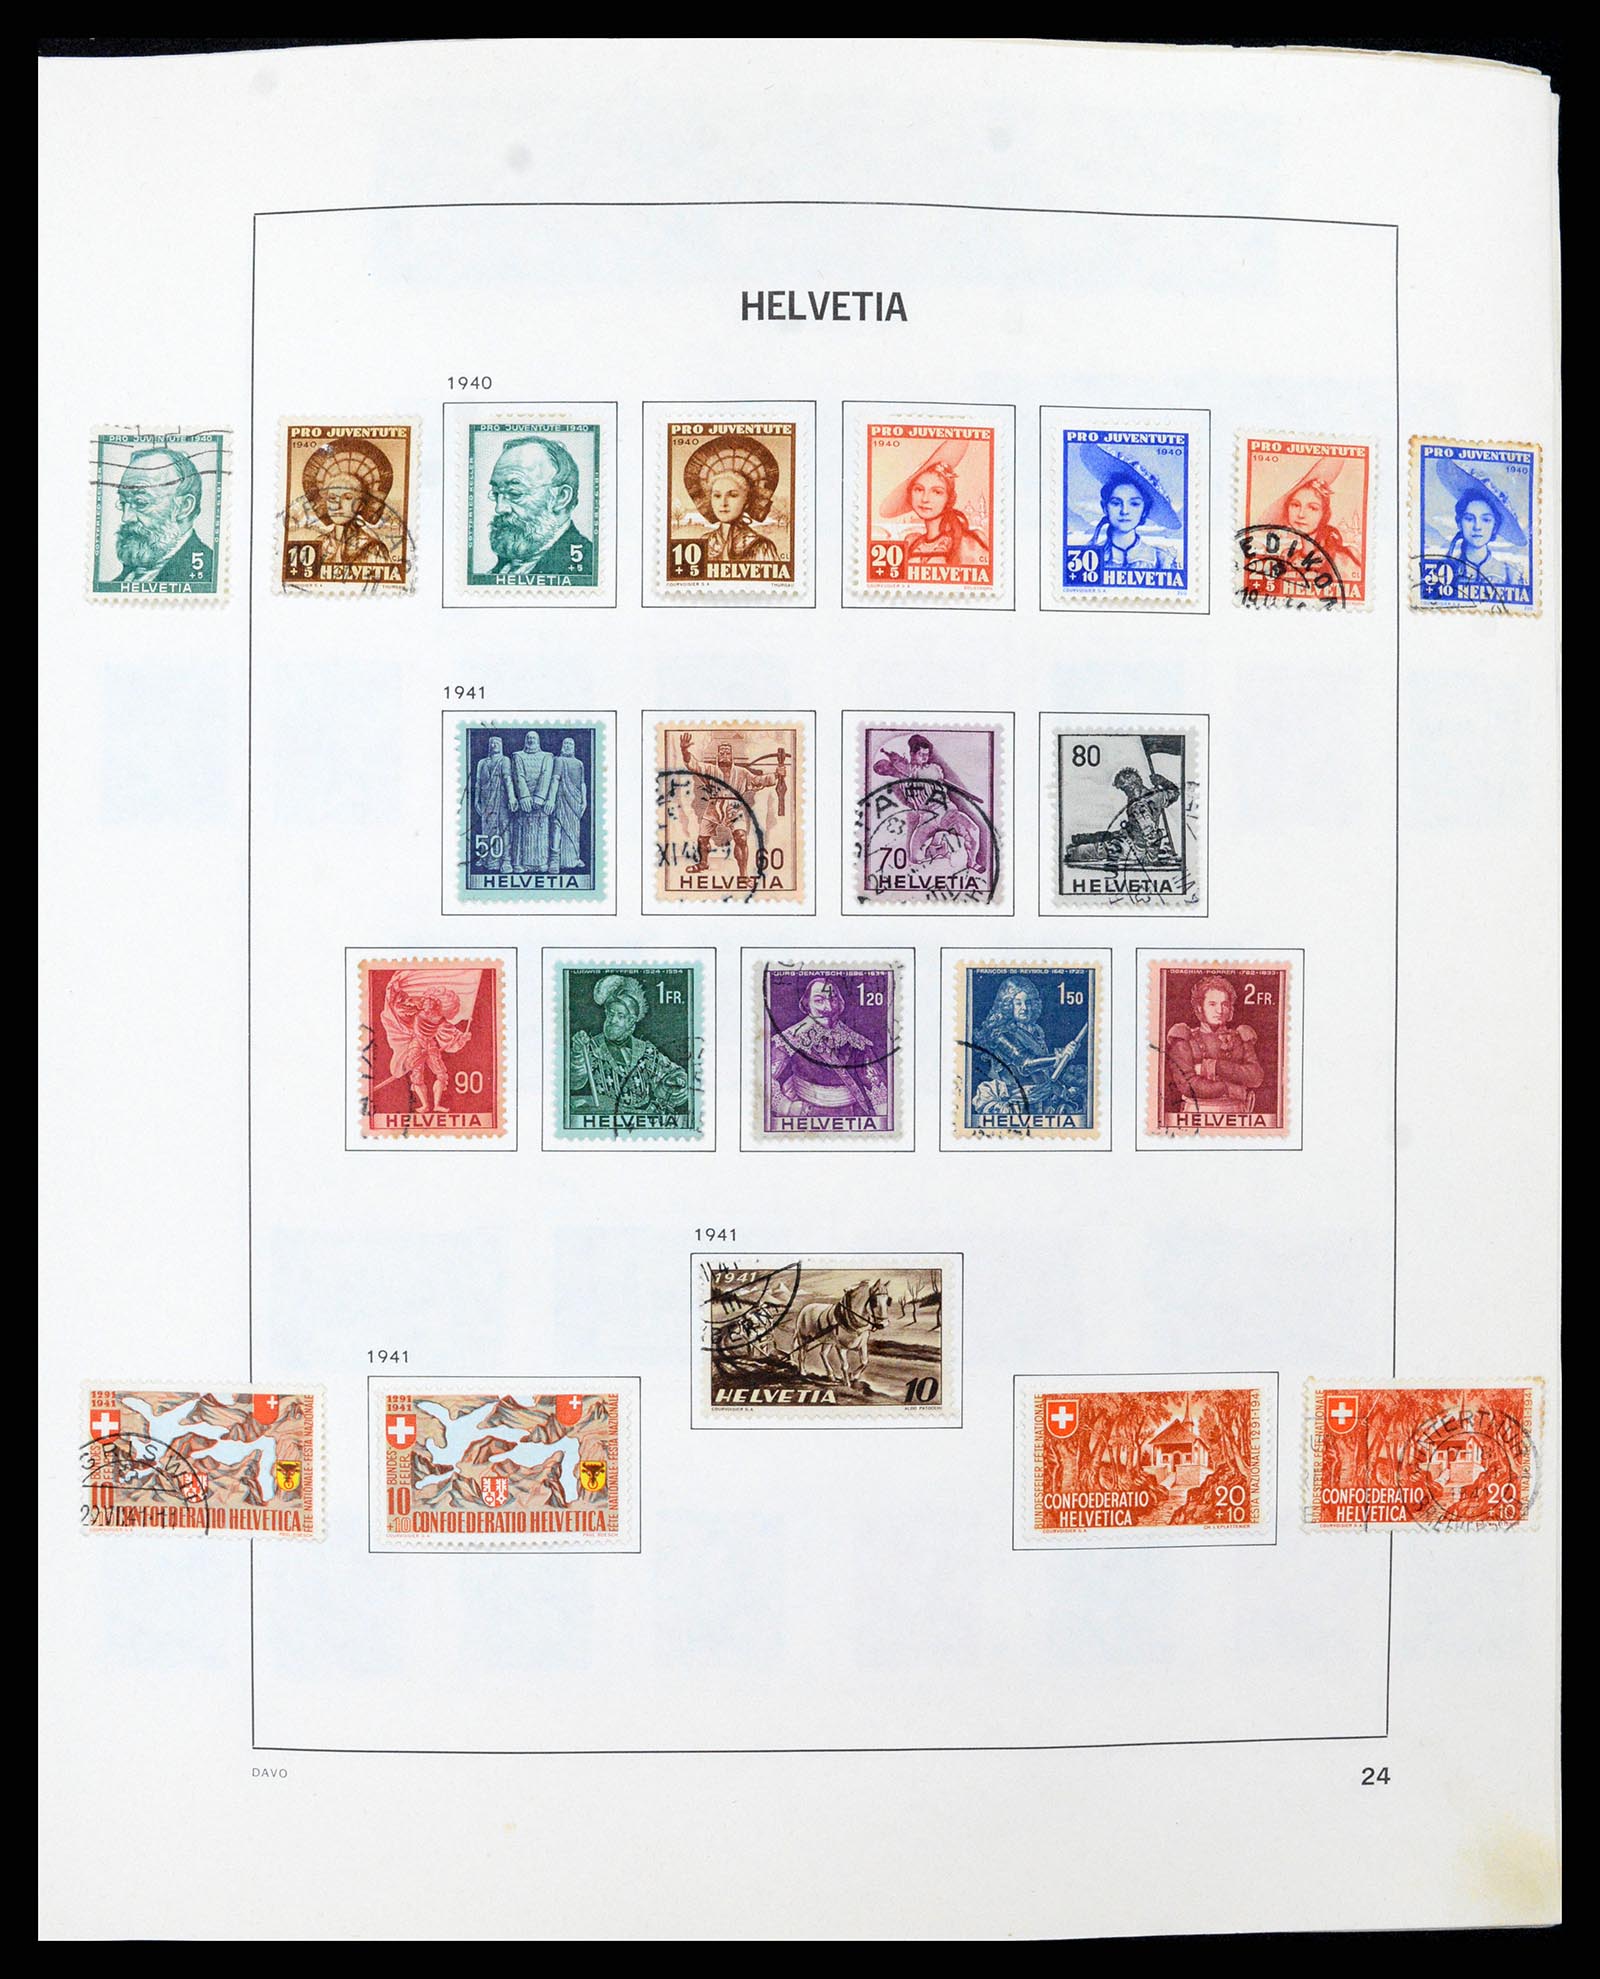 37496 023 - Stamp collection 37496 Switzerland 1854-2002.